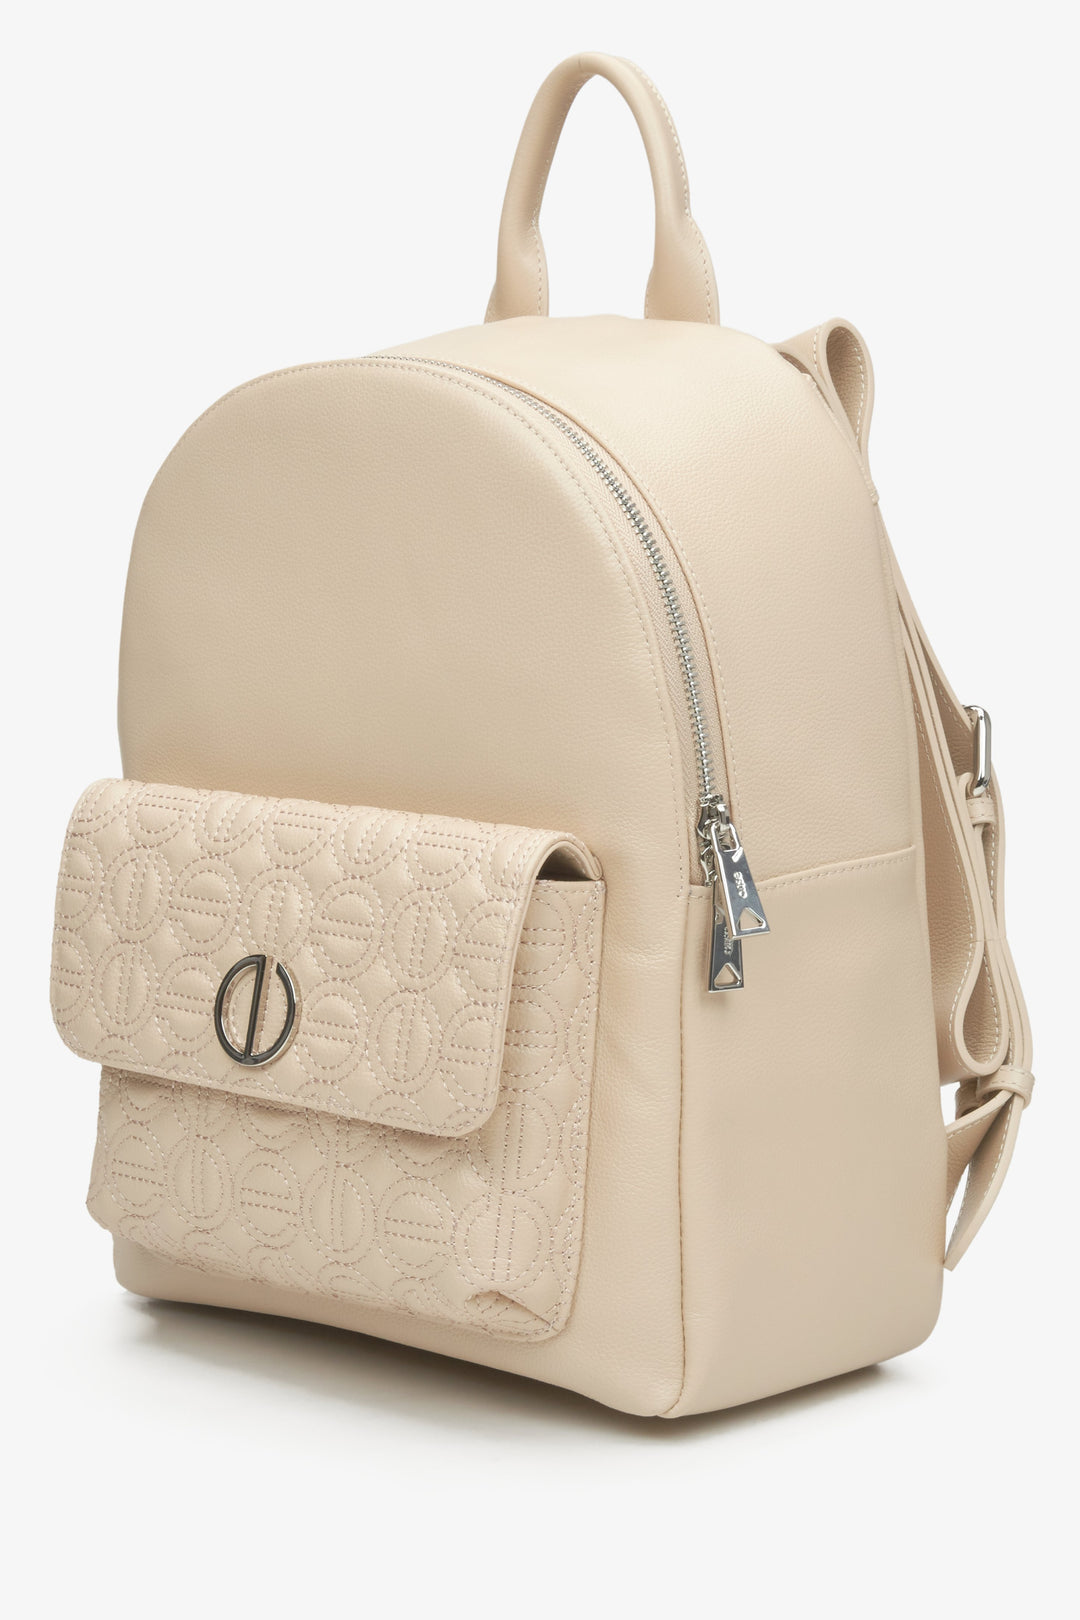 Women's light beige leather backpack by Estro.